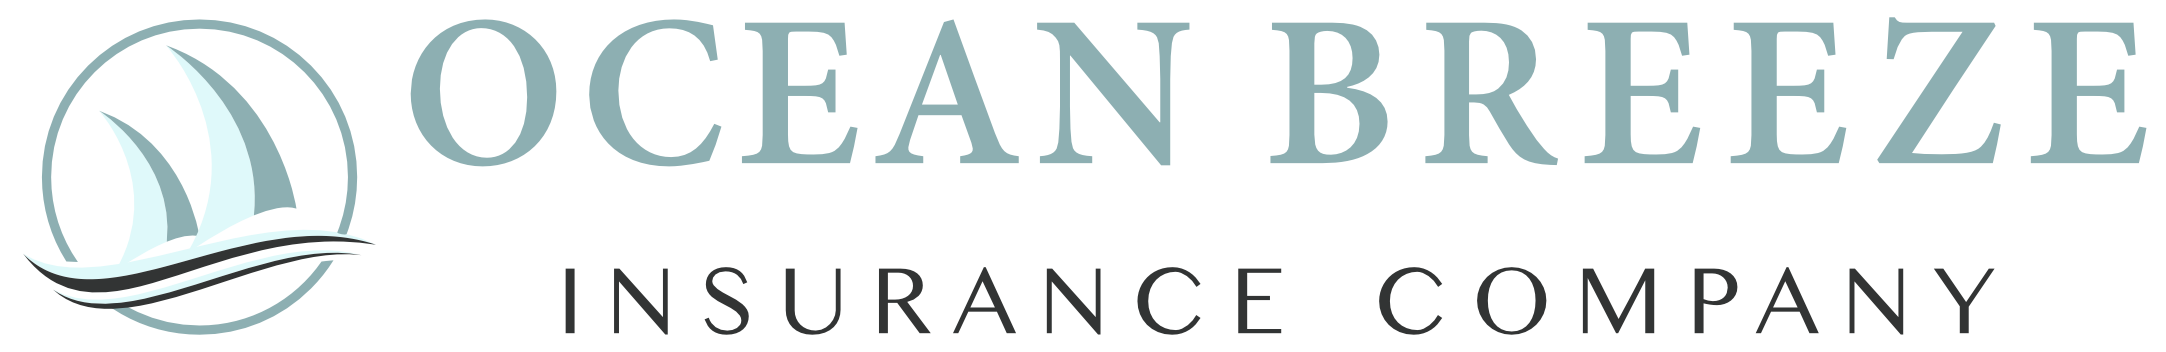 Ocean Breeze Insurance